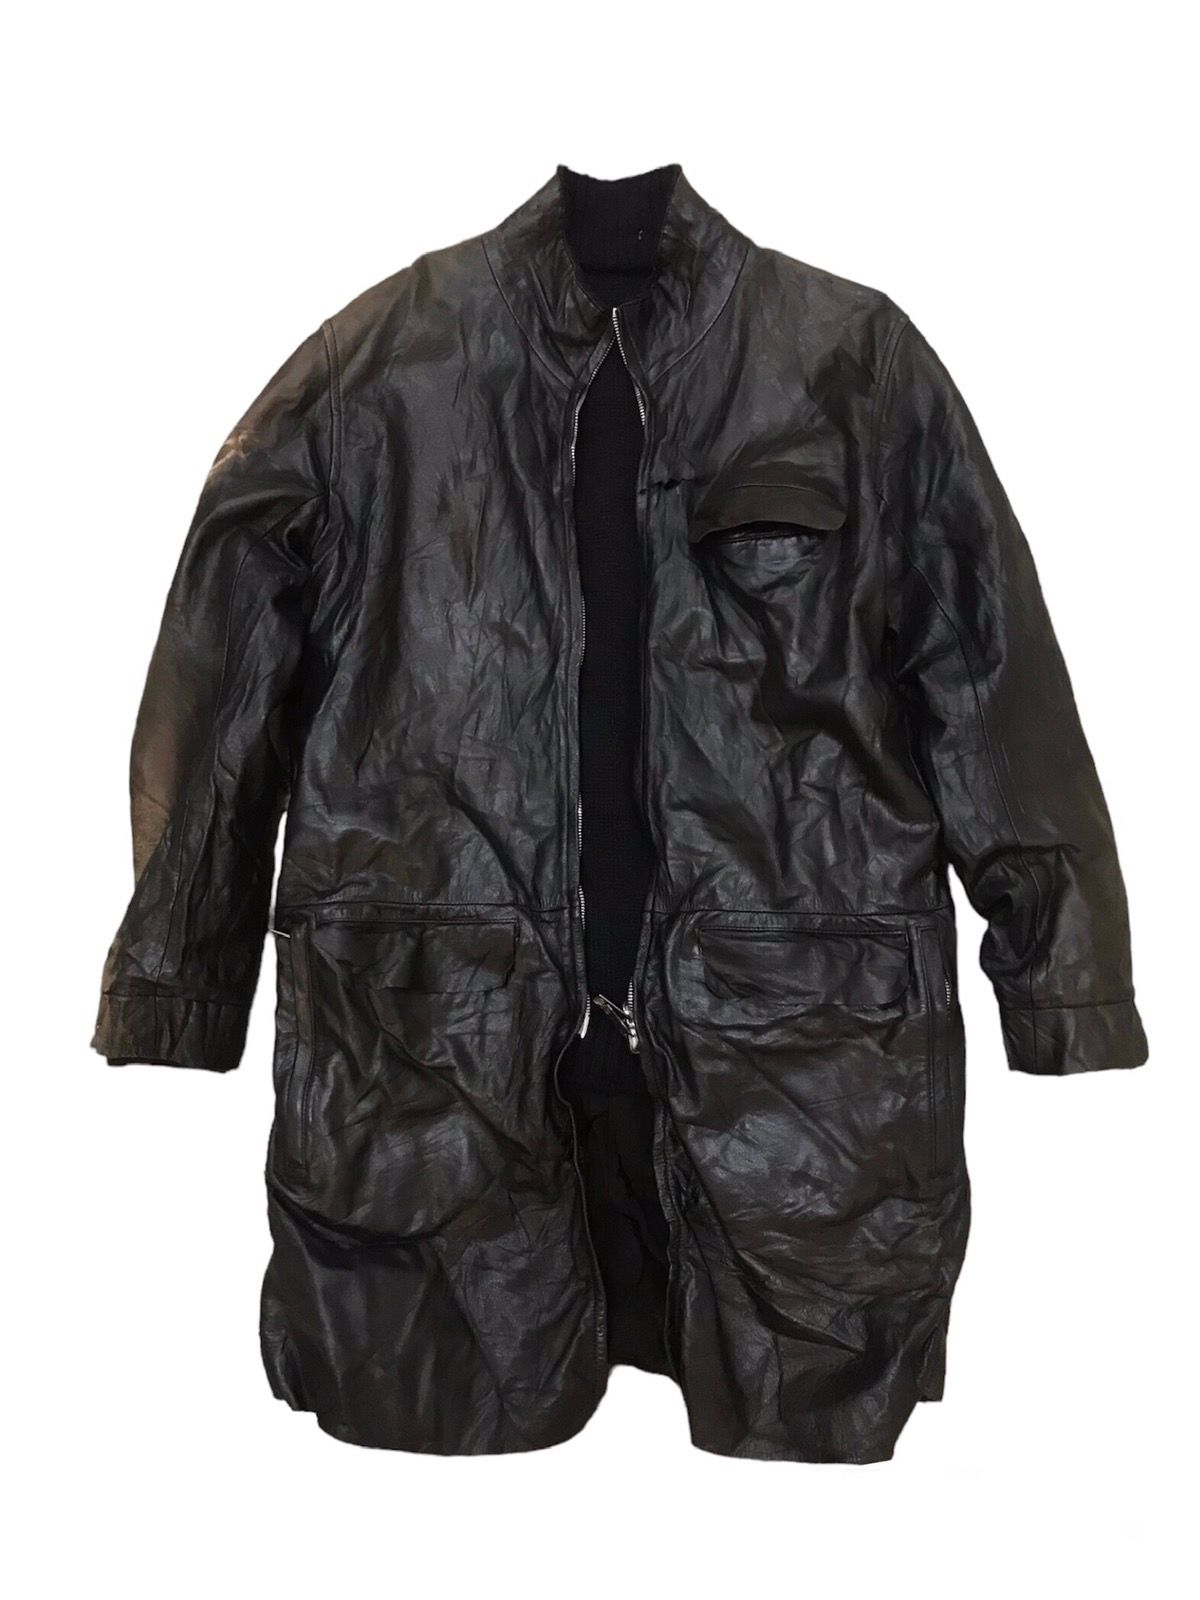 AW99 Undercover Ambivalence Cow Leather Coat - Size Medium - 1